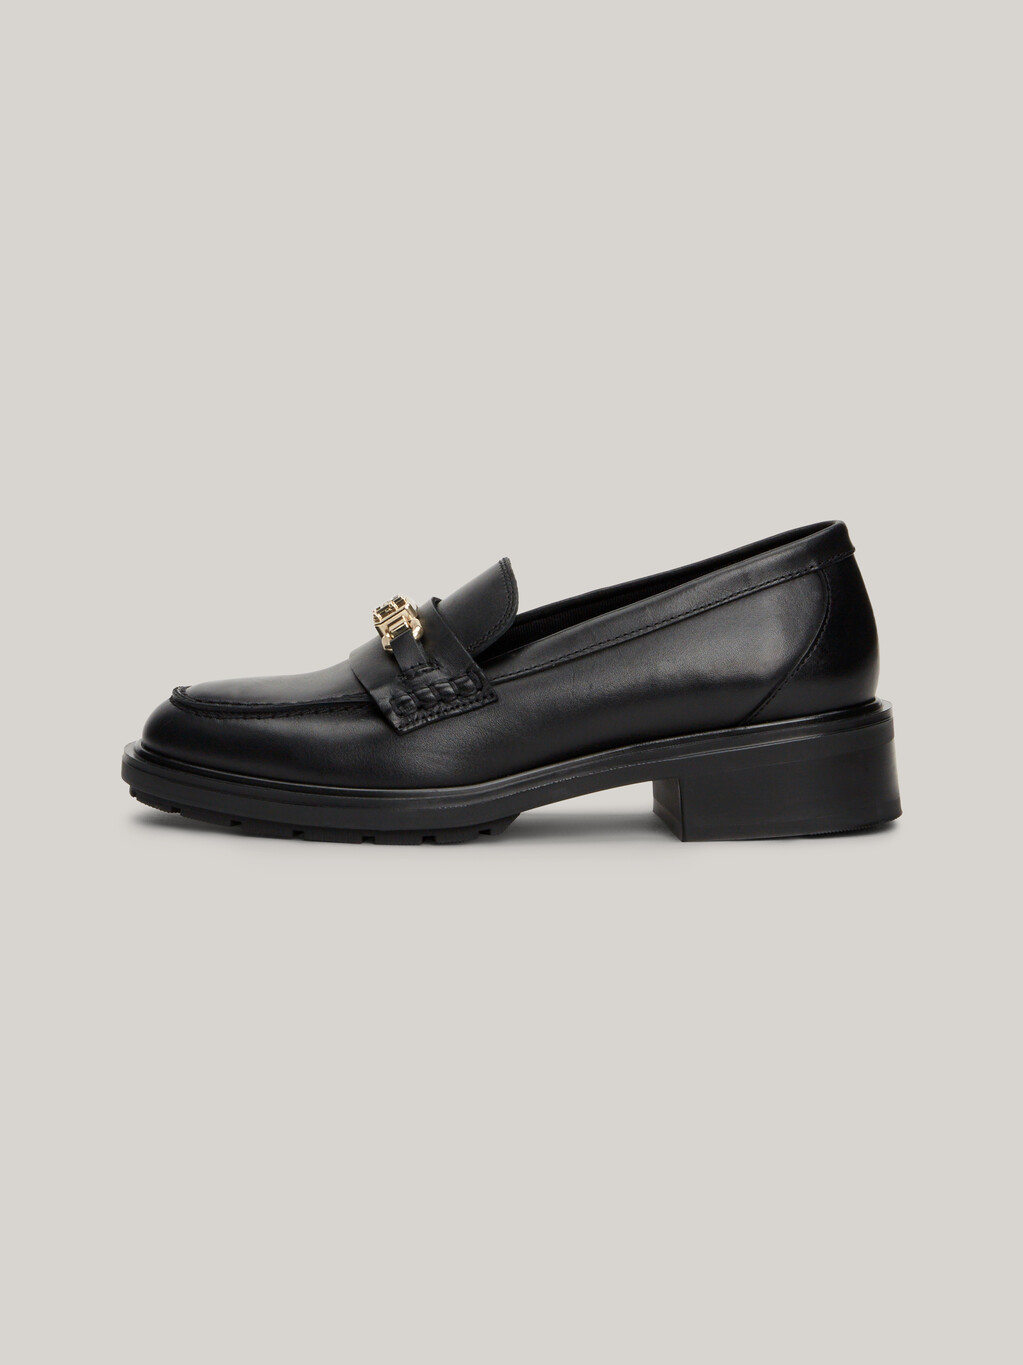 TH Monogram Leather Loafers, Black, hi-res